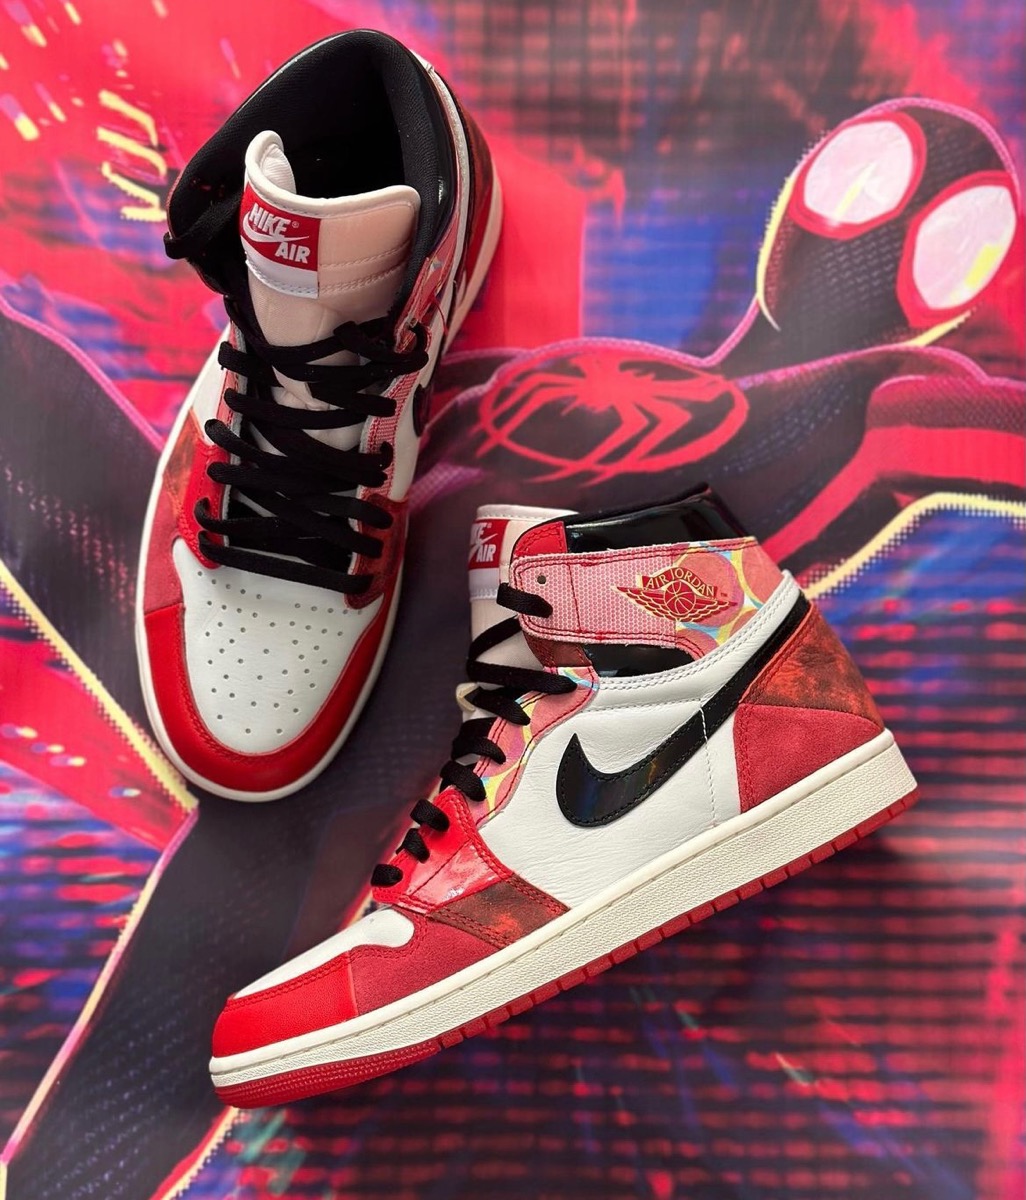 Spider-Man × Nike Air Jordan 1 Retro High OG SP “Next Chapter”が国内5月20日に発売予定  ［DV1748-601］ | UP TO DATE